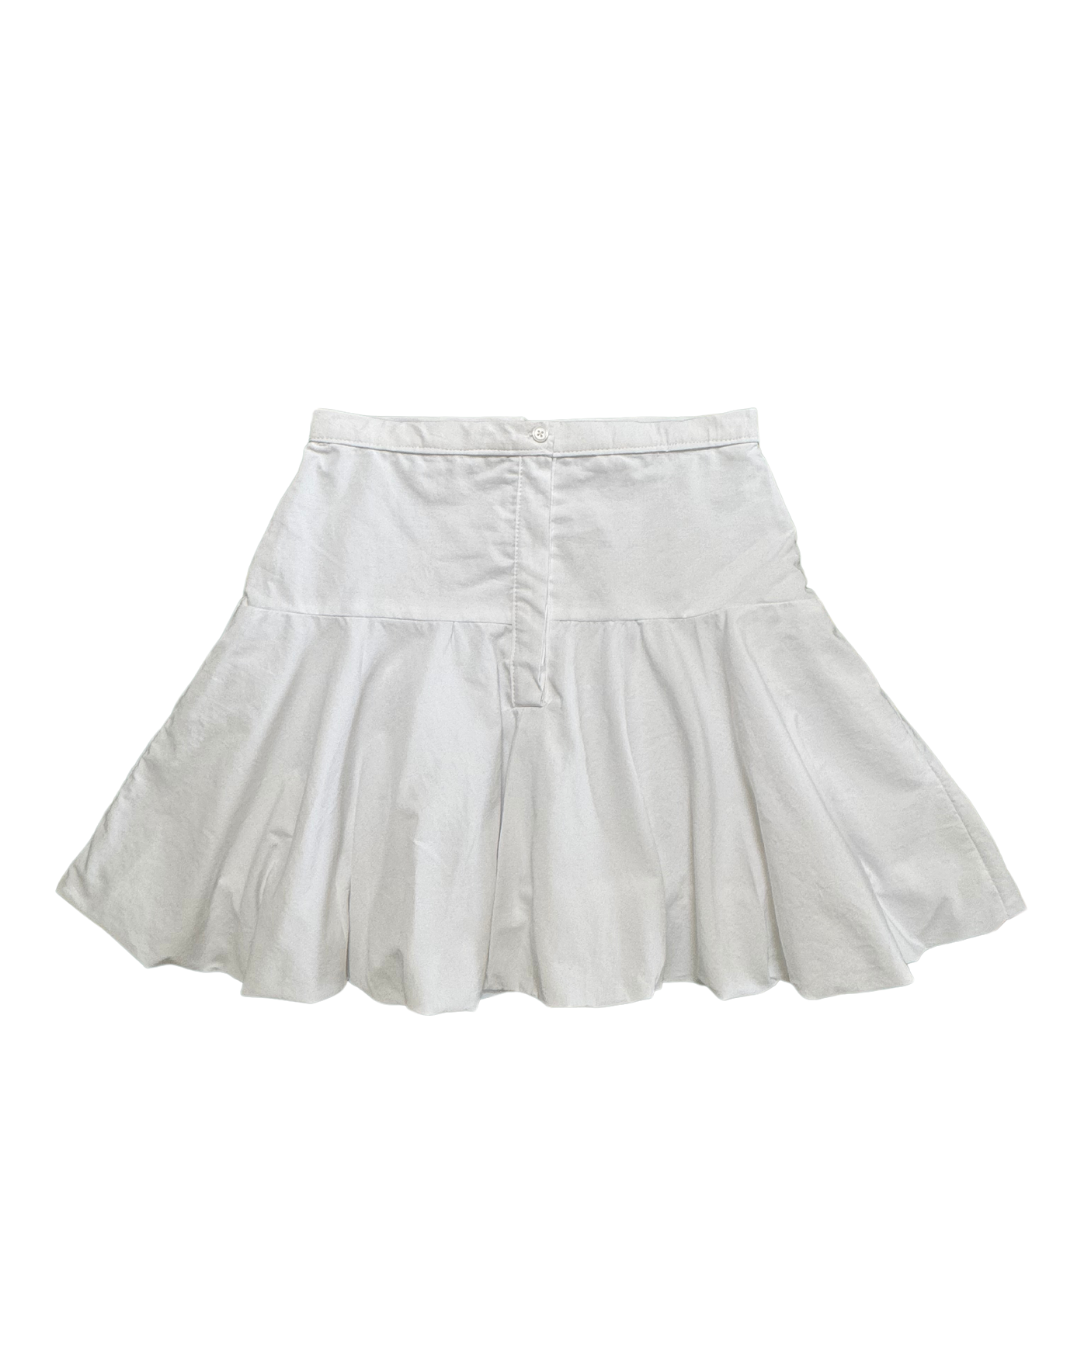 White bubble skirt